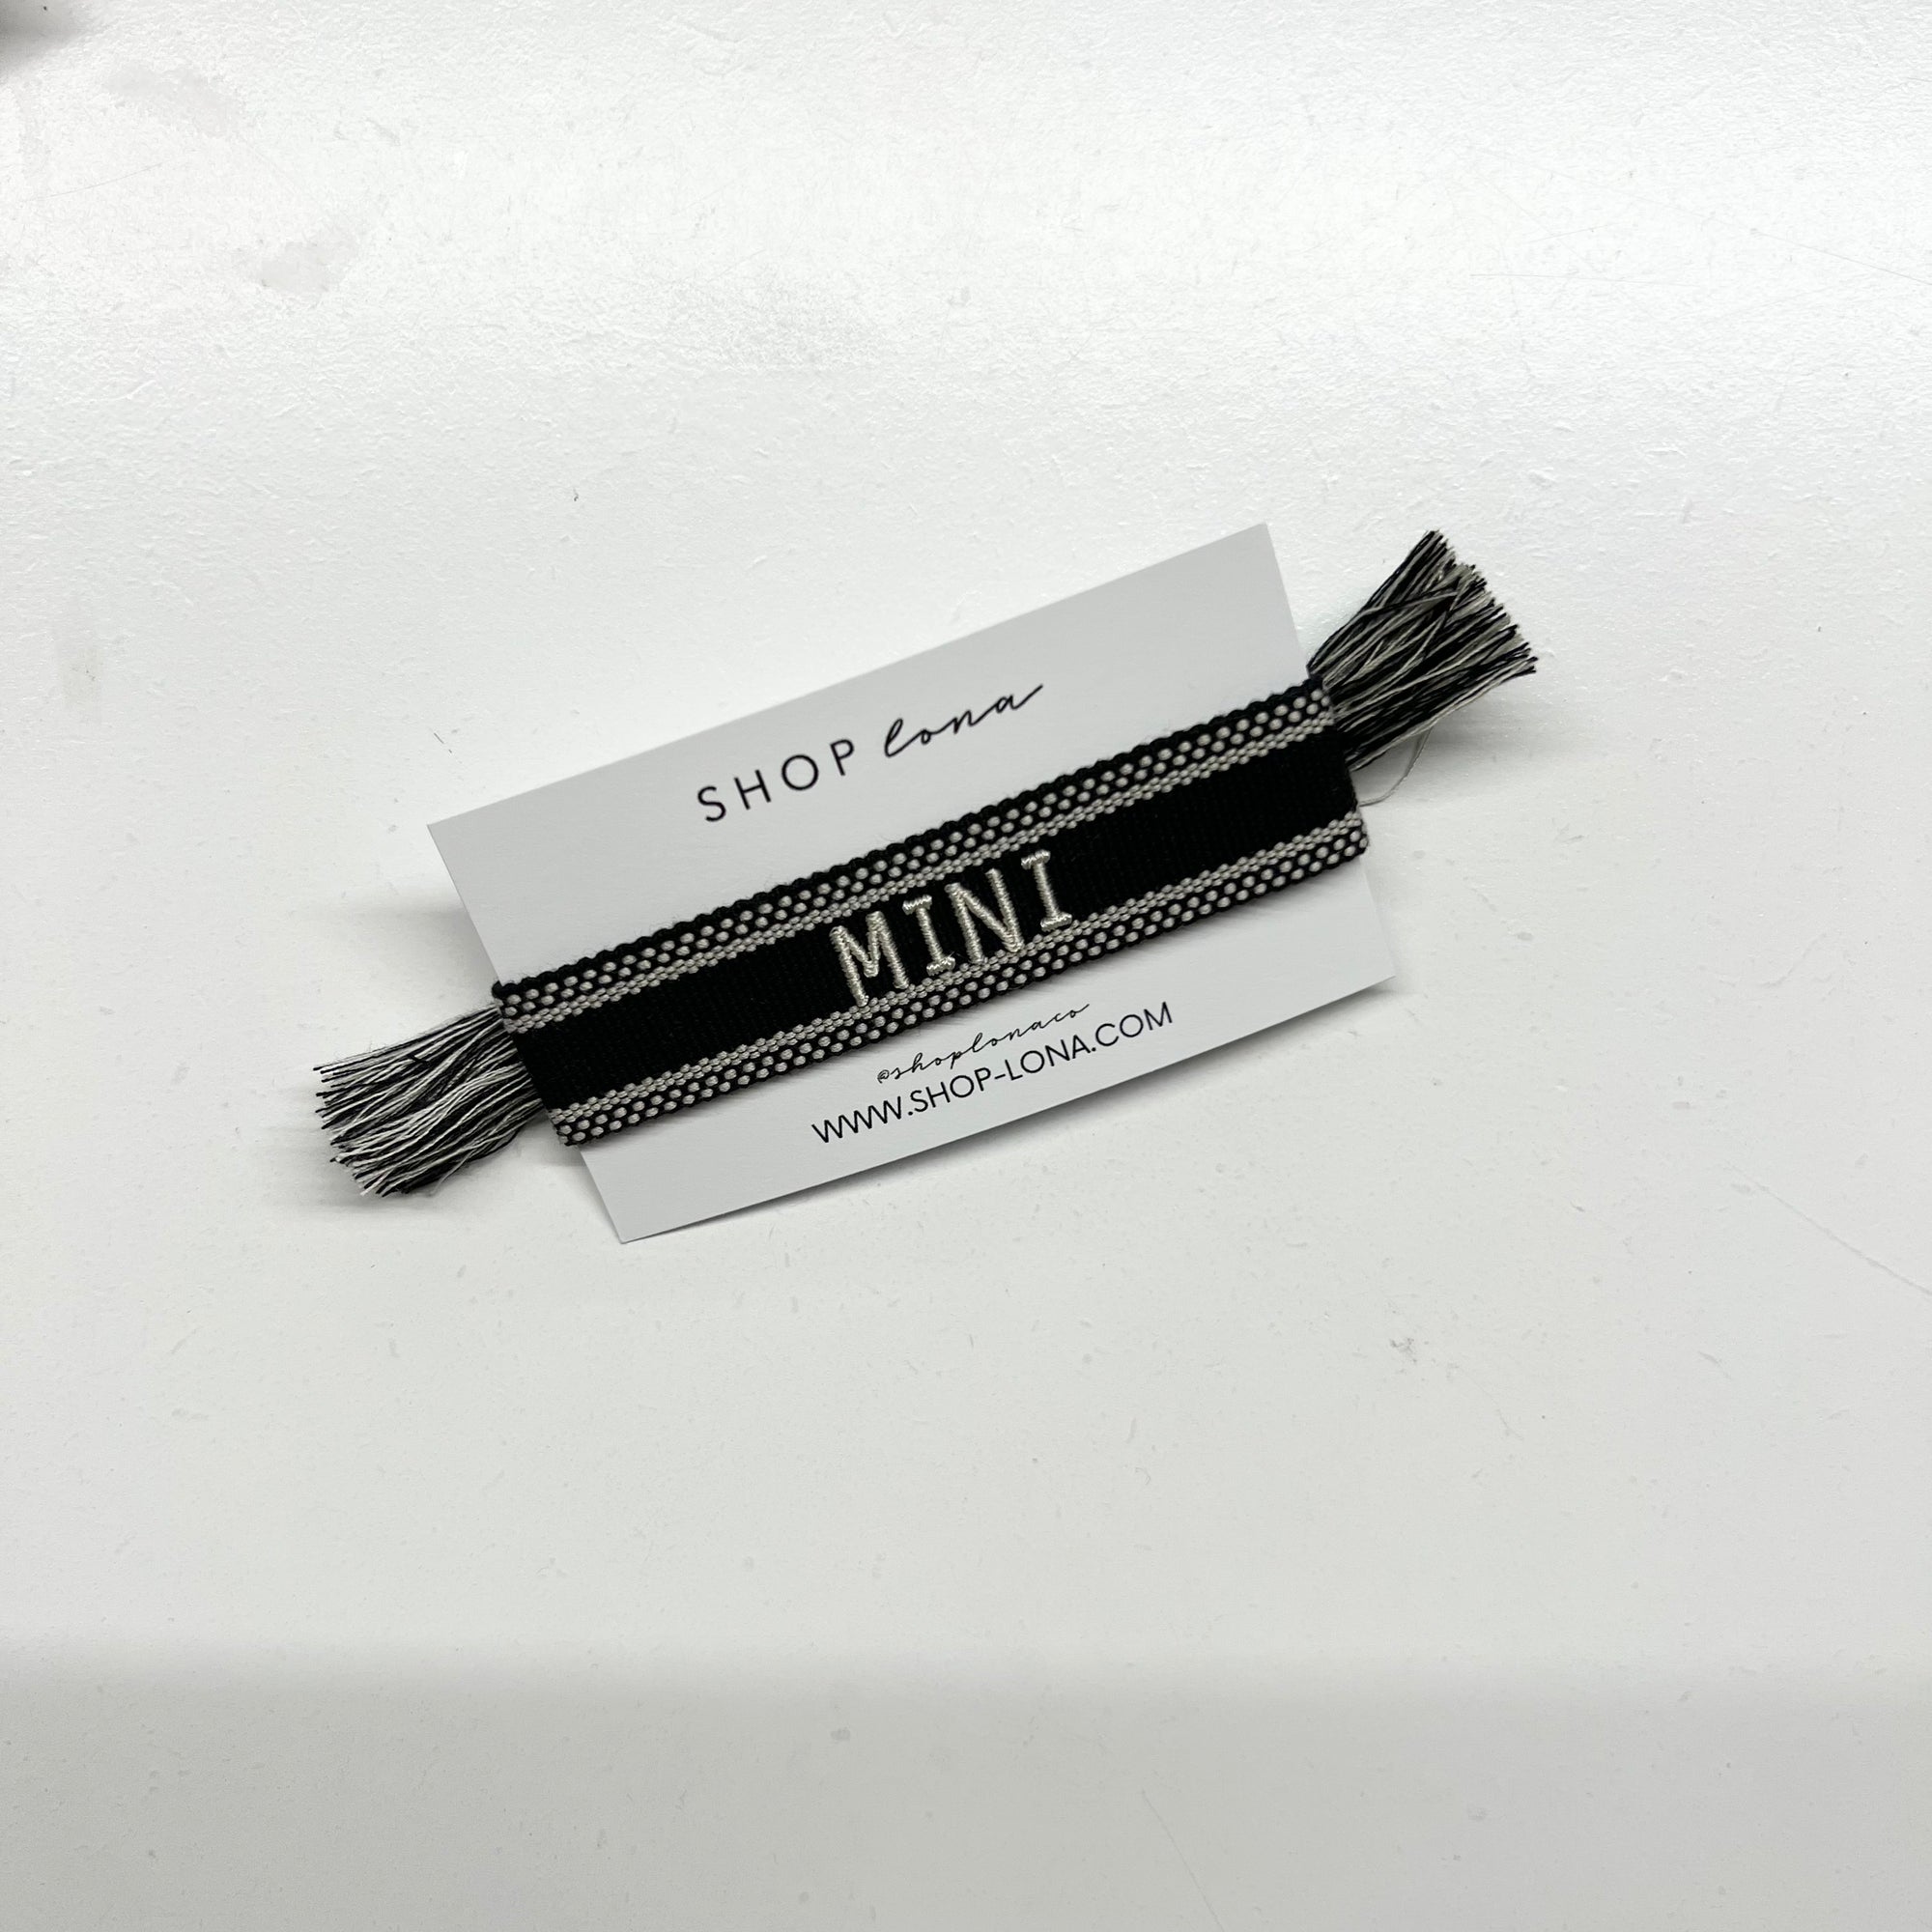 MINI embroidered friendship bracelet in black